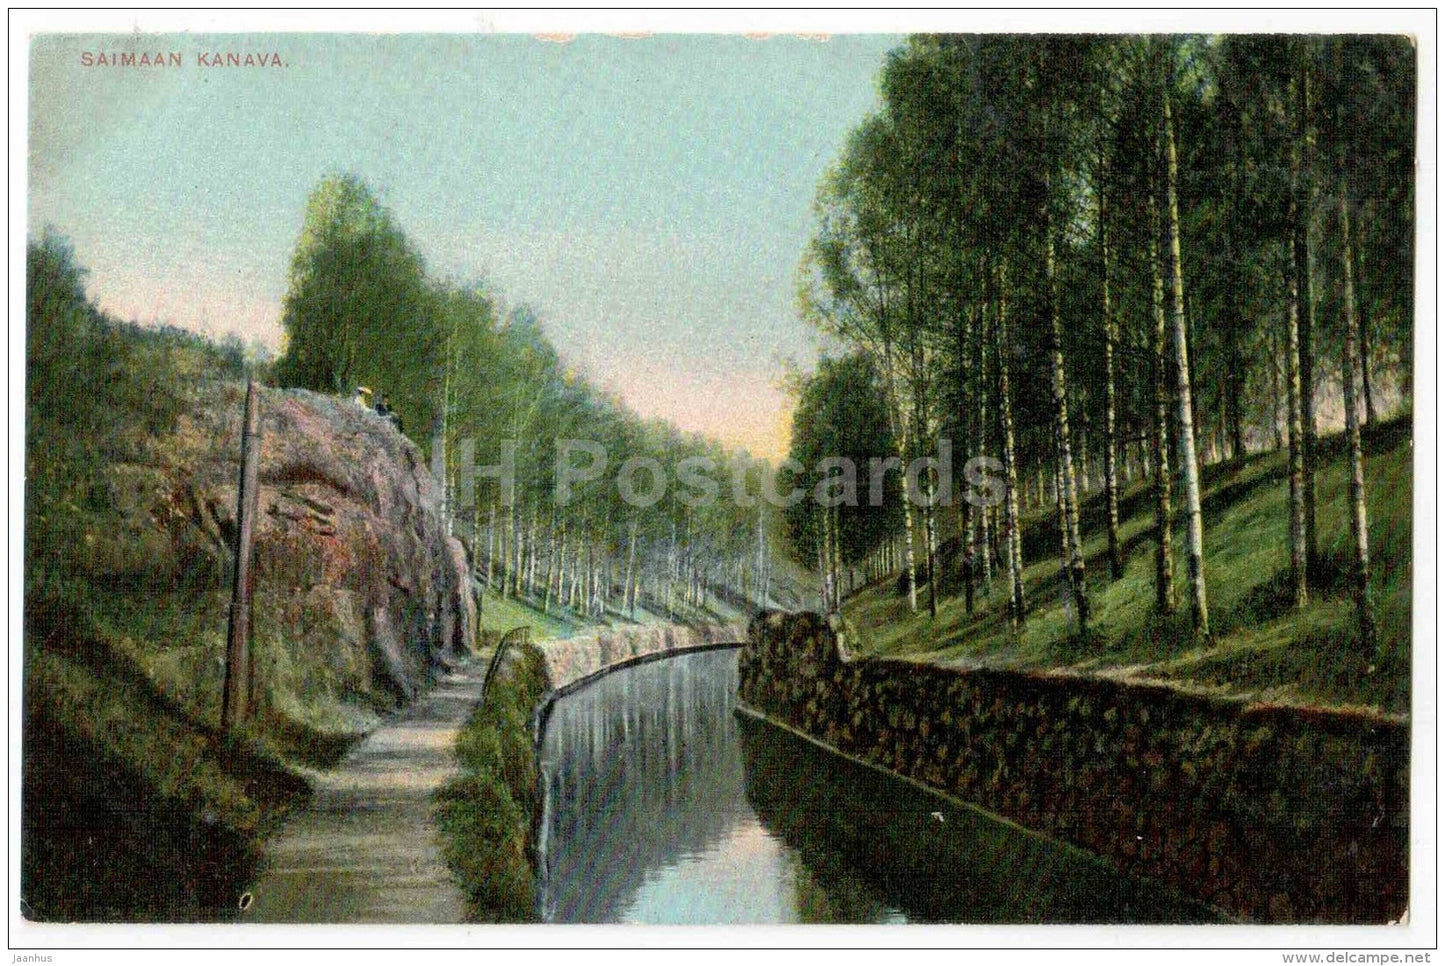 Saimaan Kanava - channel - old postcard - Finland - Tsarist Russia - unused - JH Postcards